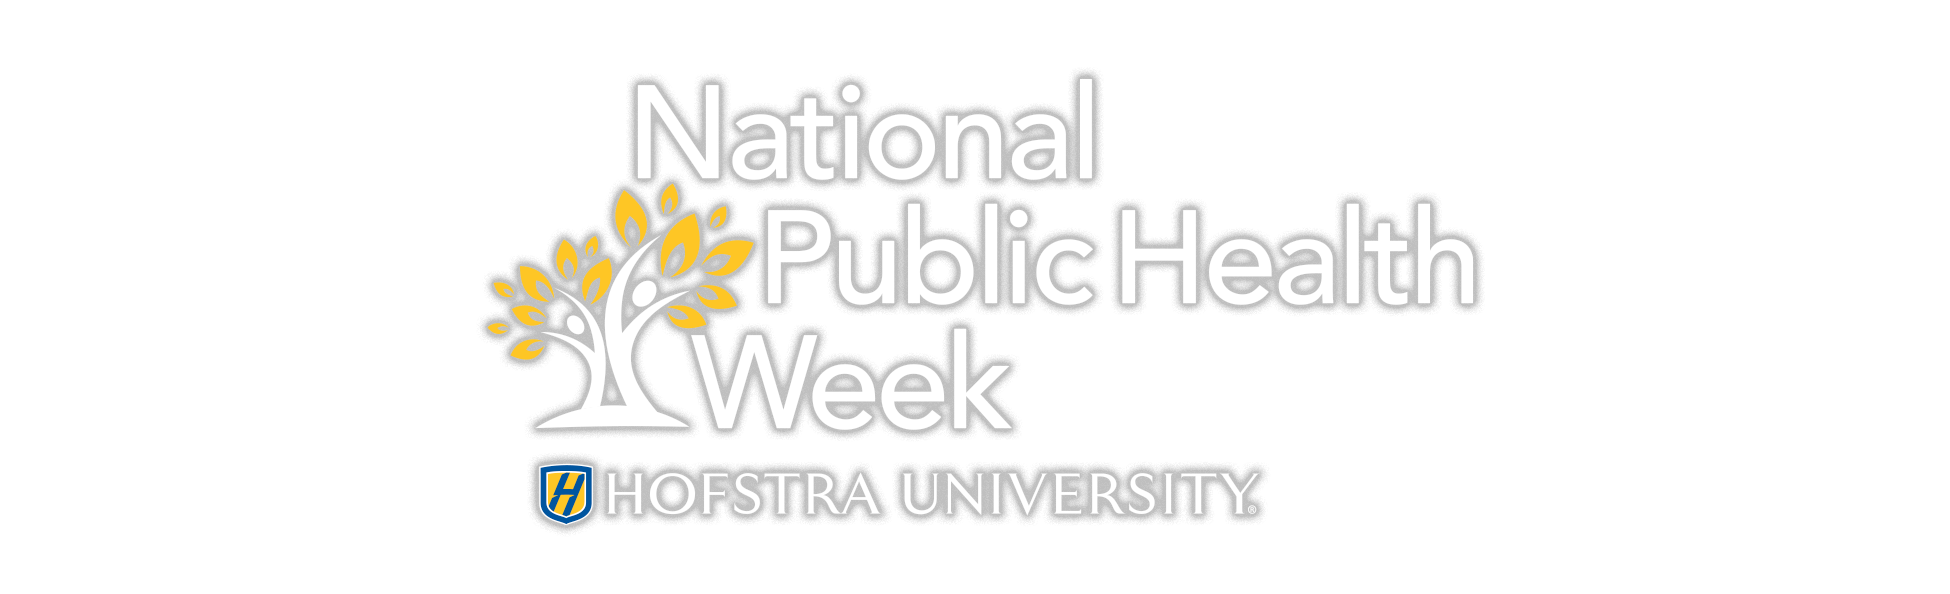 National Public Health Week - Hofstra University